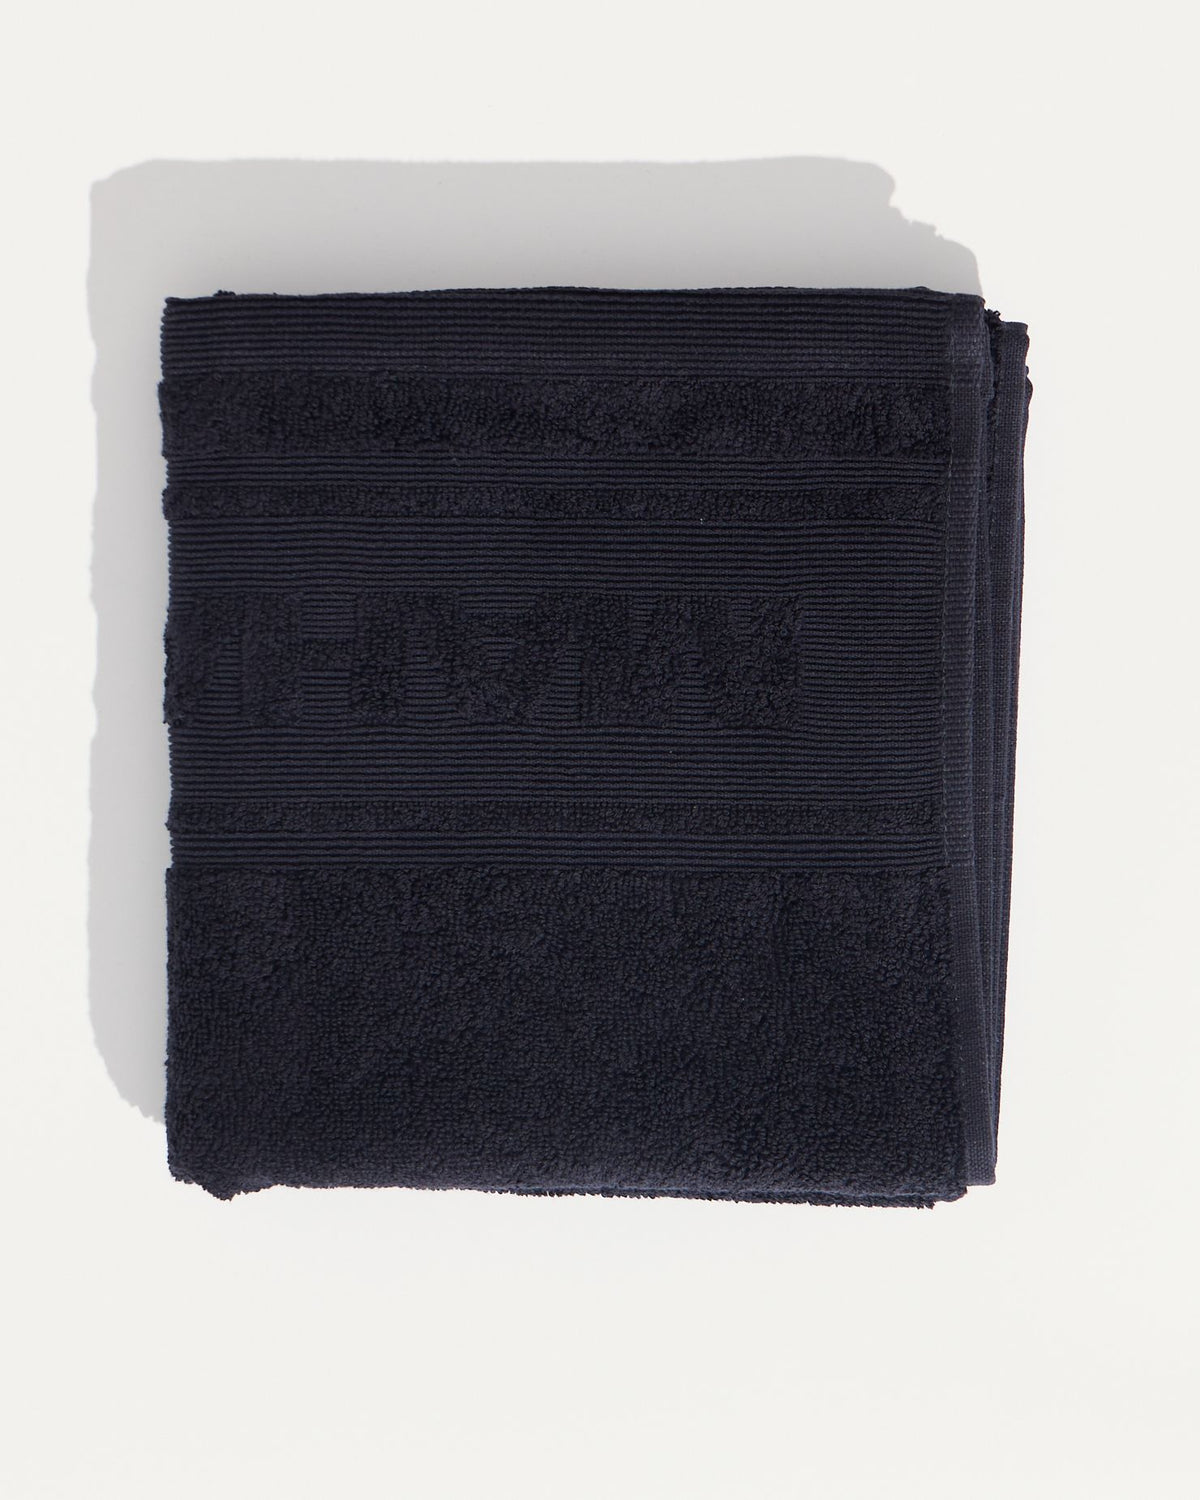 9369 Towel 40x80cm in Black